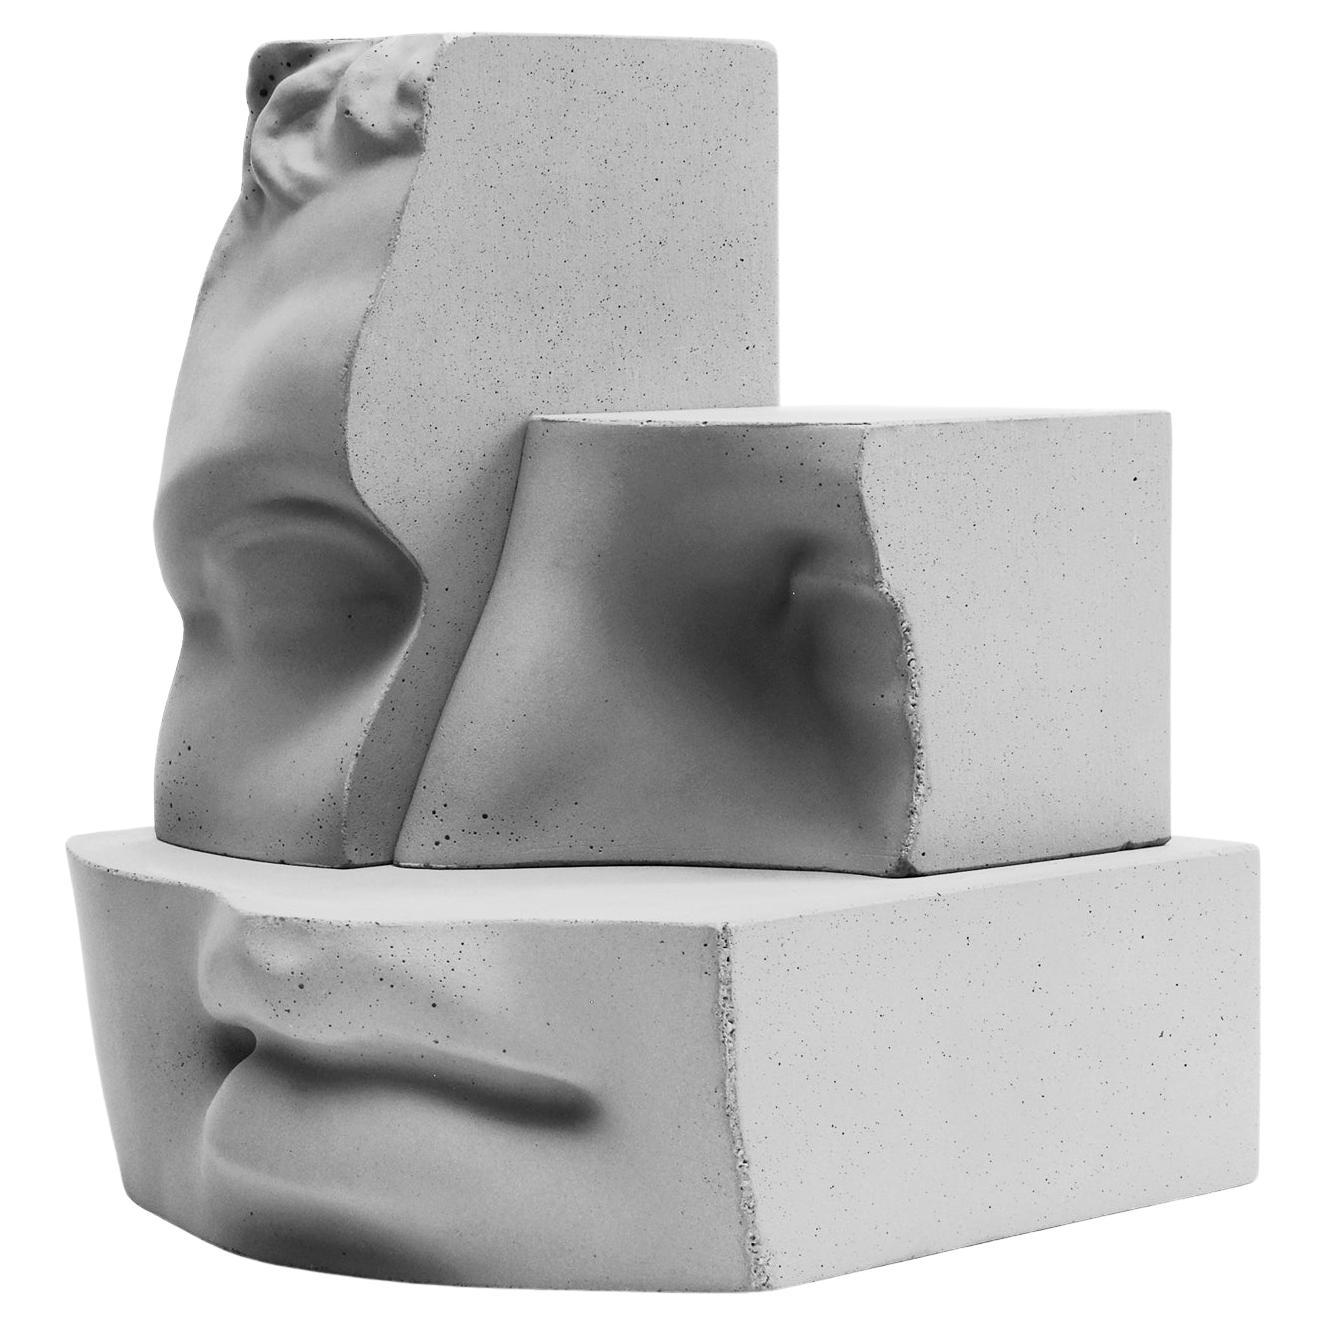 Hermes - Natural Concrete - Design Sculpture Paolo Giordano Classic Cement Cast For Sale